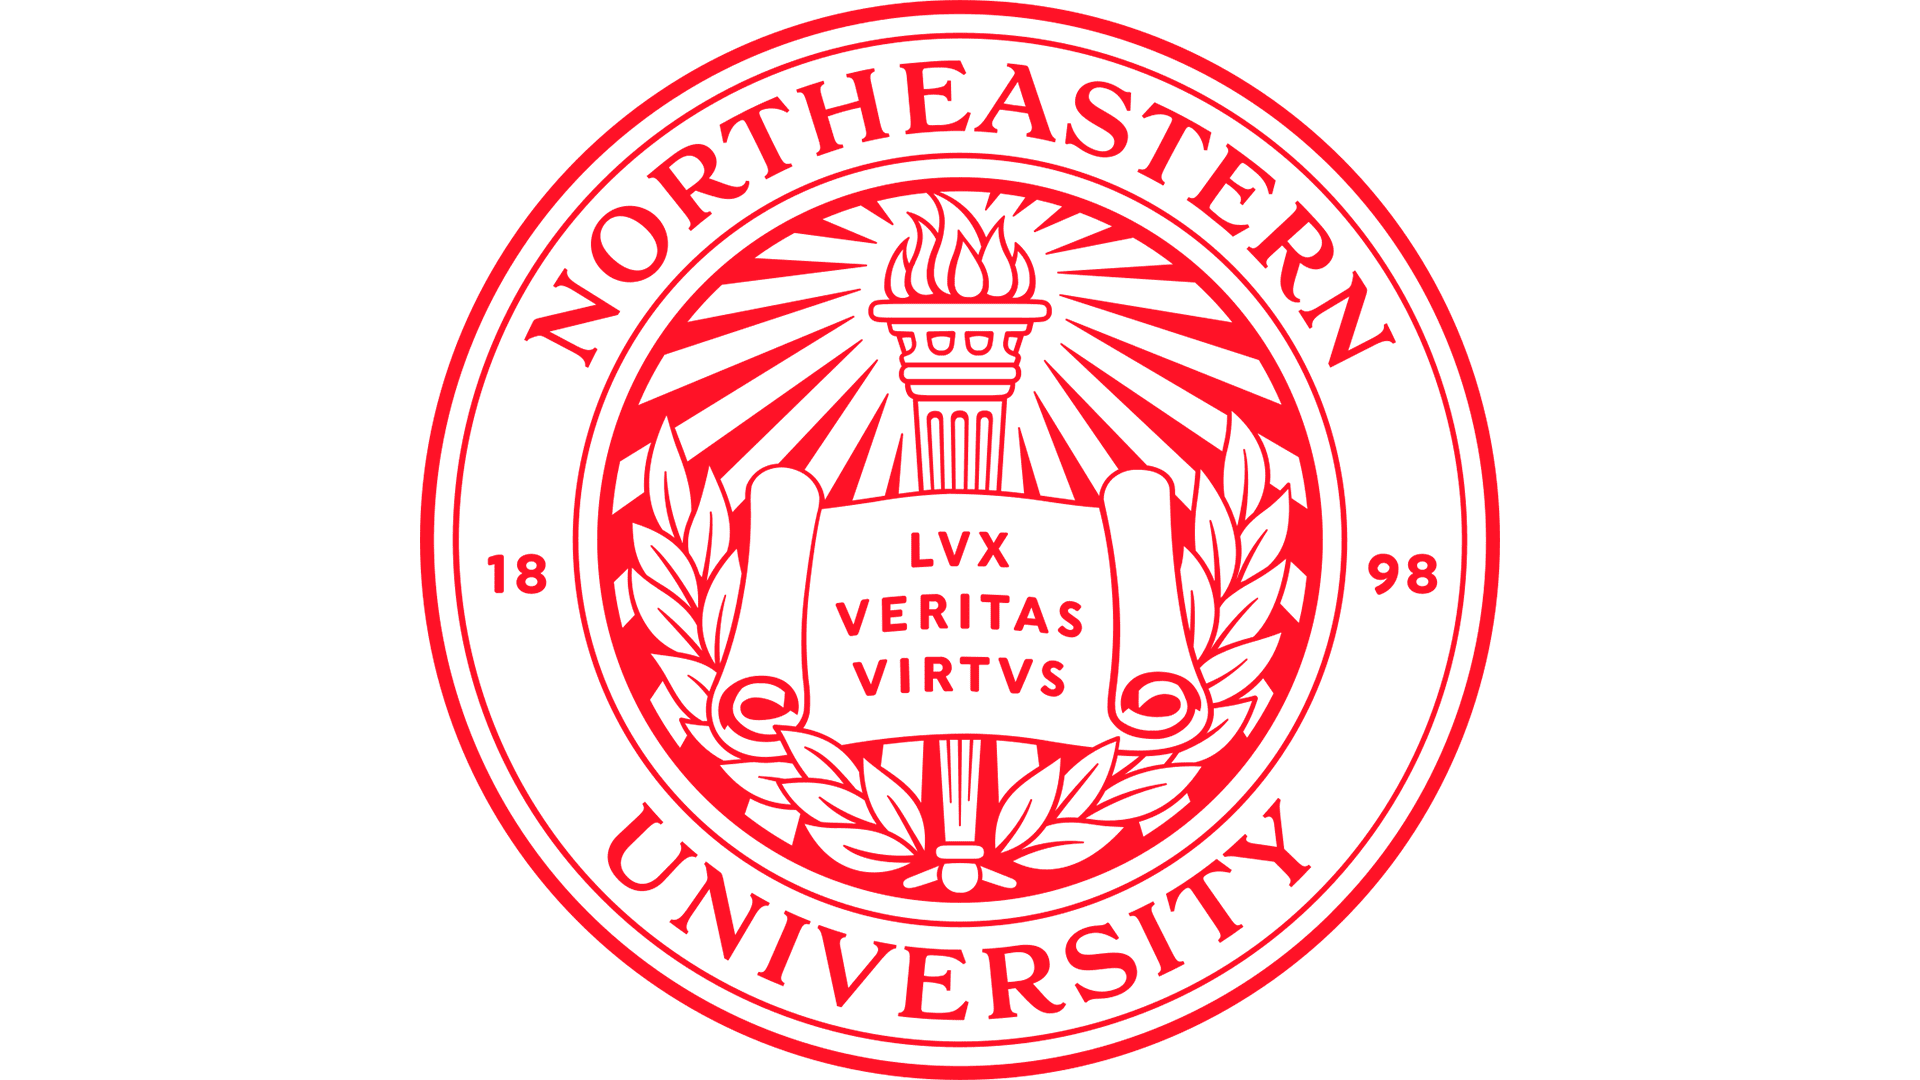 Northeastern University's logo